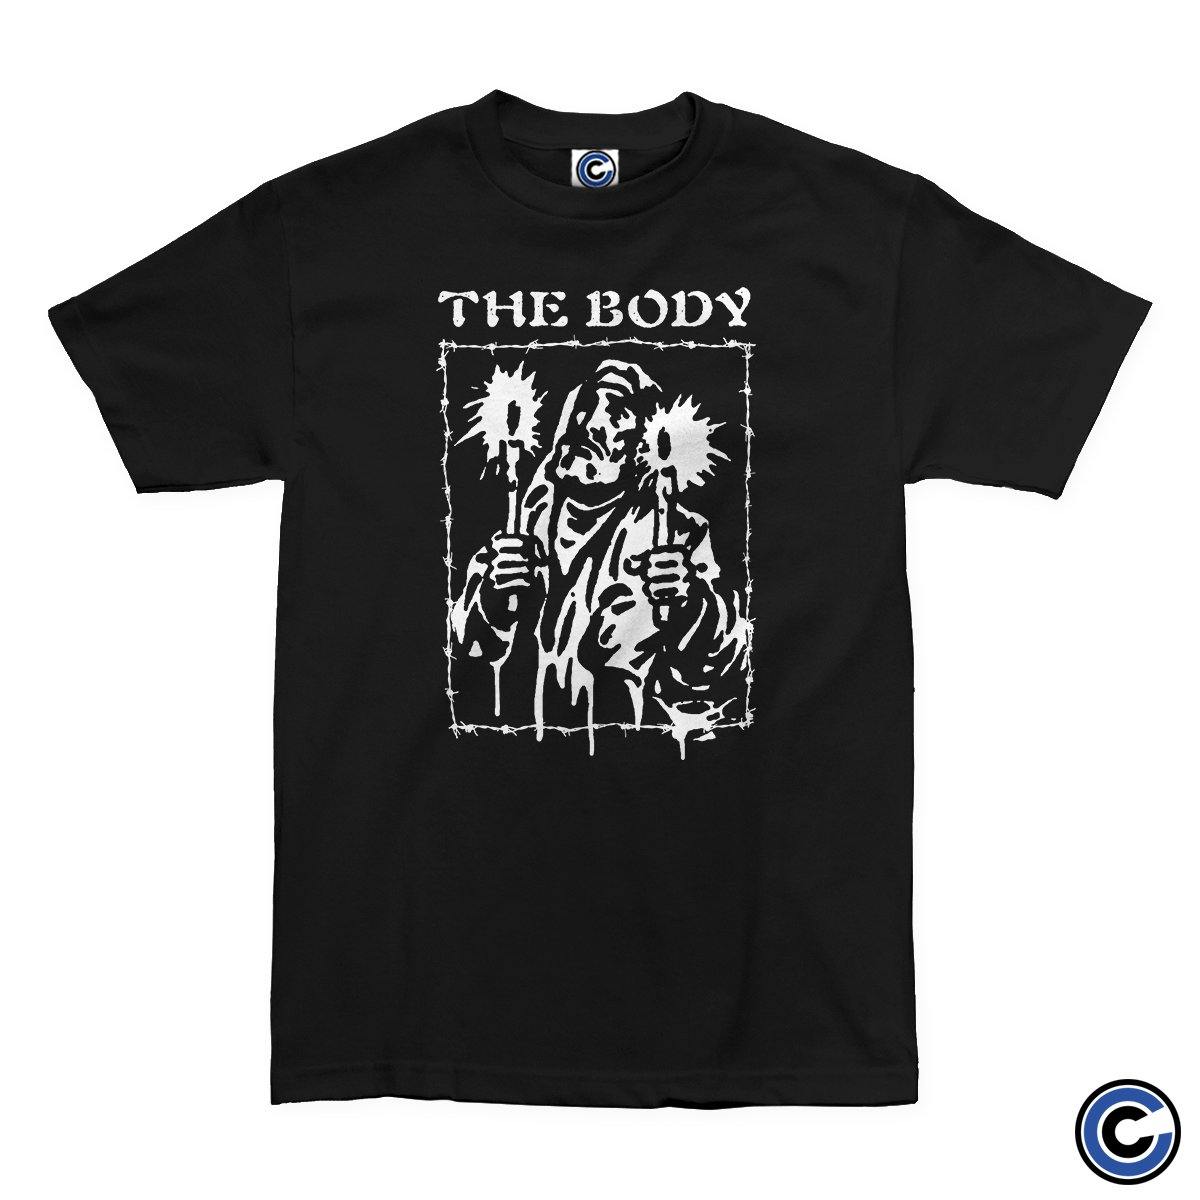 Buy – The Body "Candles" Shirt – Band & Music Merch – Cold Cuts Merch